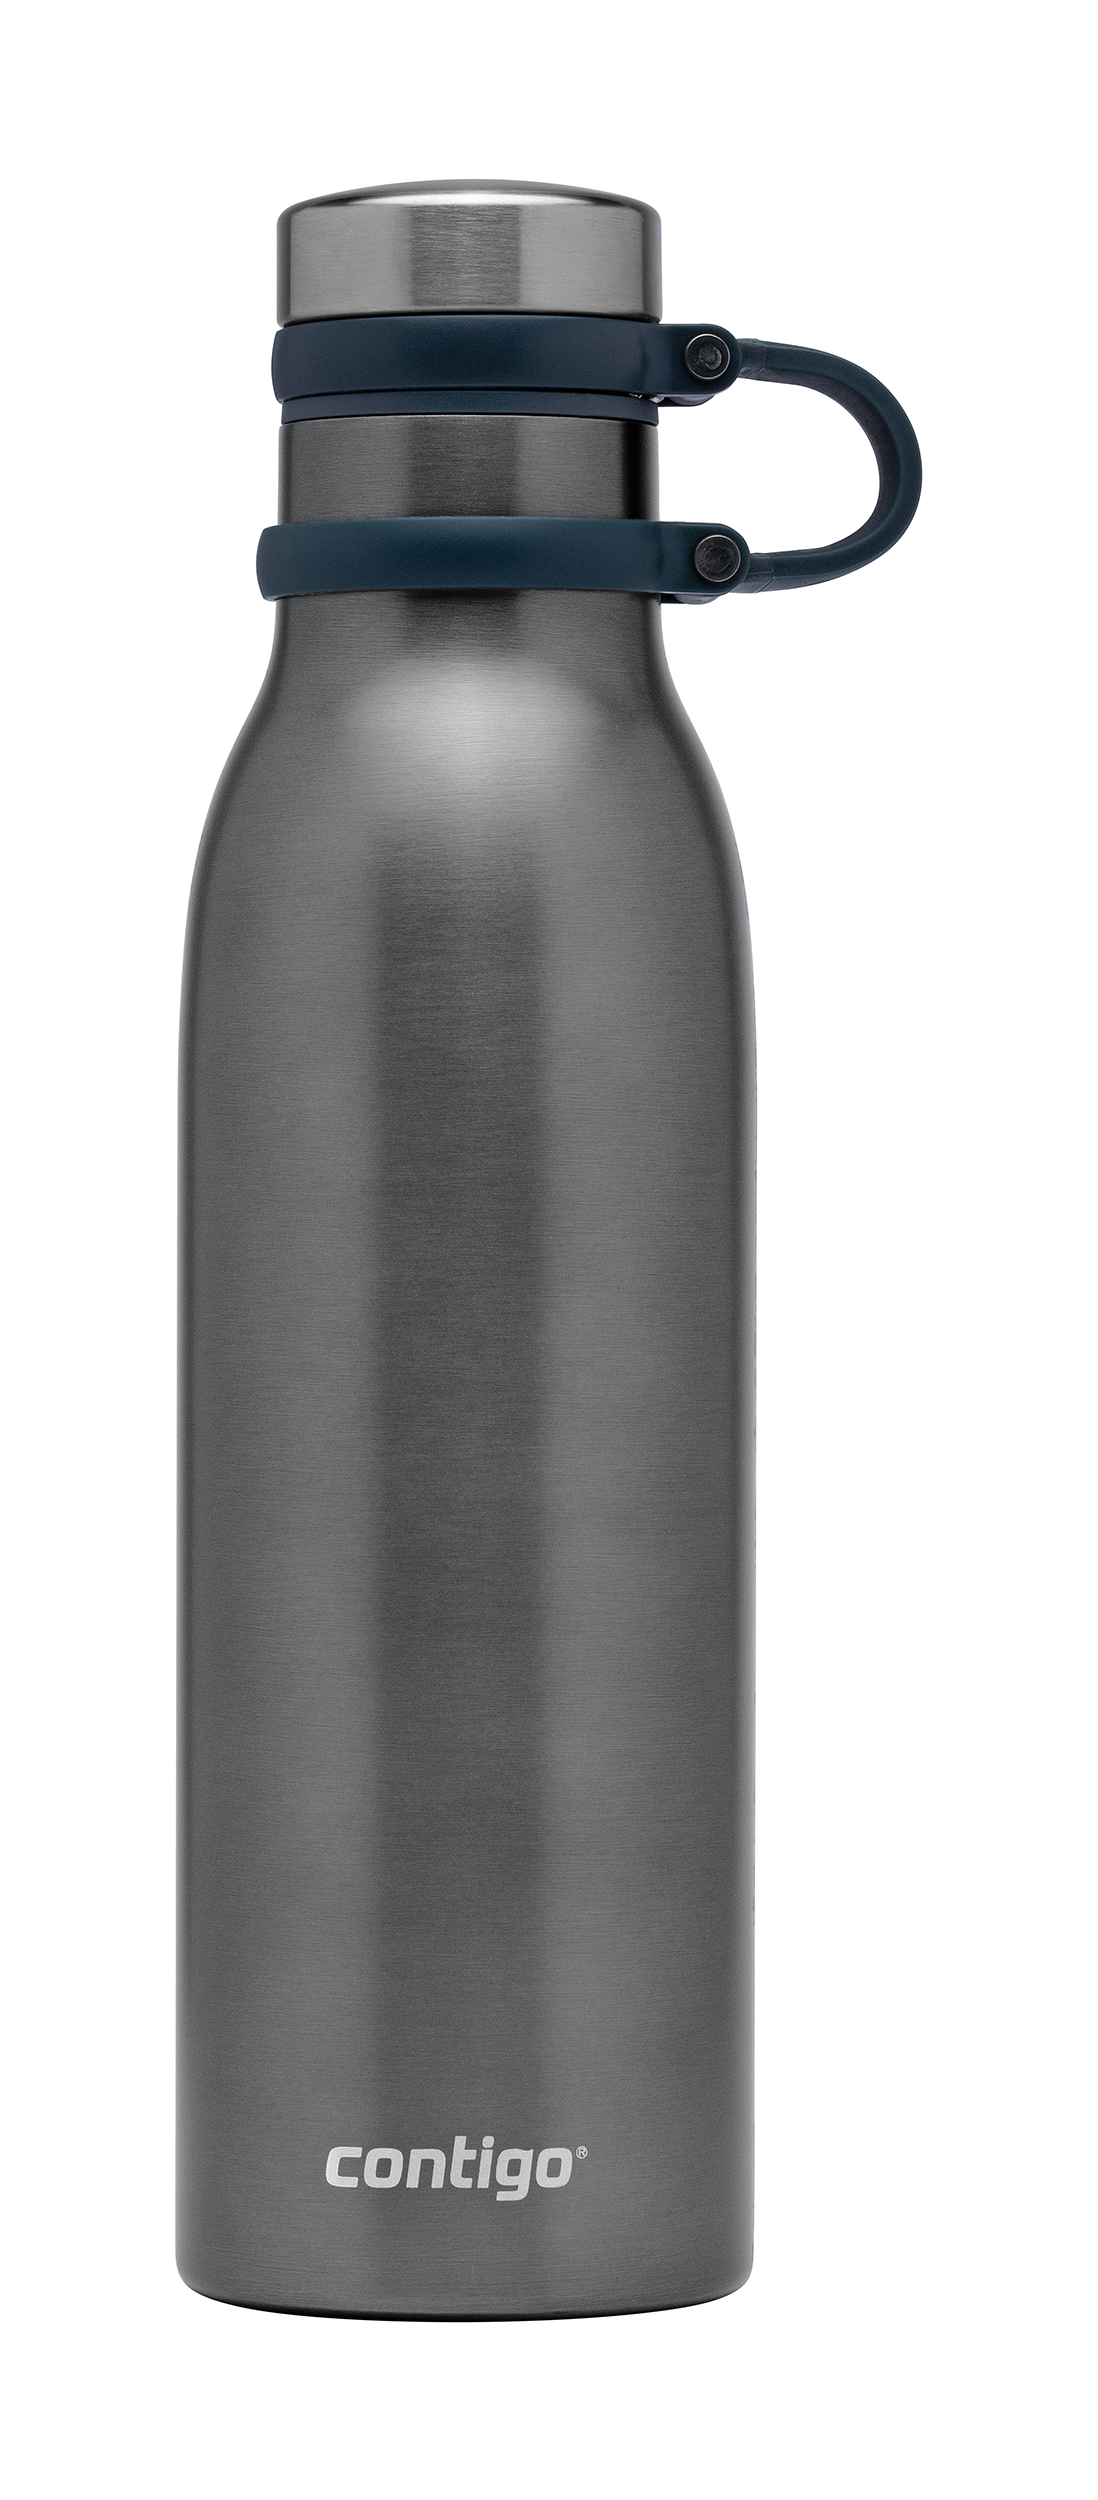 Contigo Snapseal Insulated Travel Mug, 20 oz, Sake & Autoseal West Loop  Vacuum-Insulated Stainless Steel